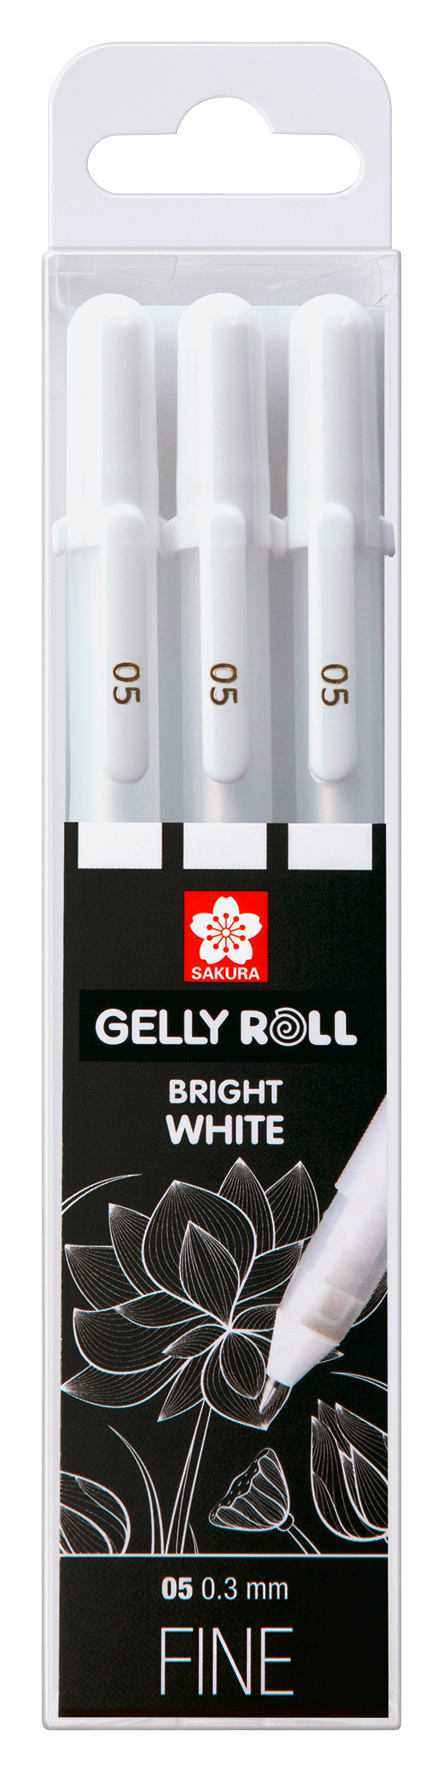 SAKURA Gelly Roll 0.3mm POXPGBWH3A White 3 pcs.